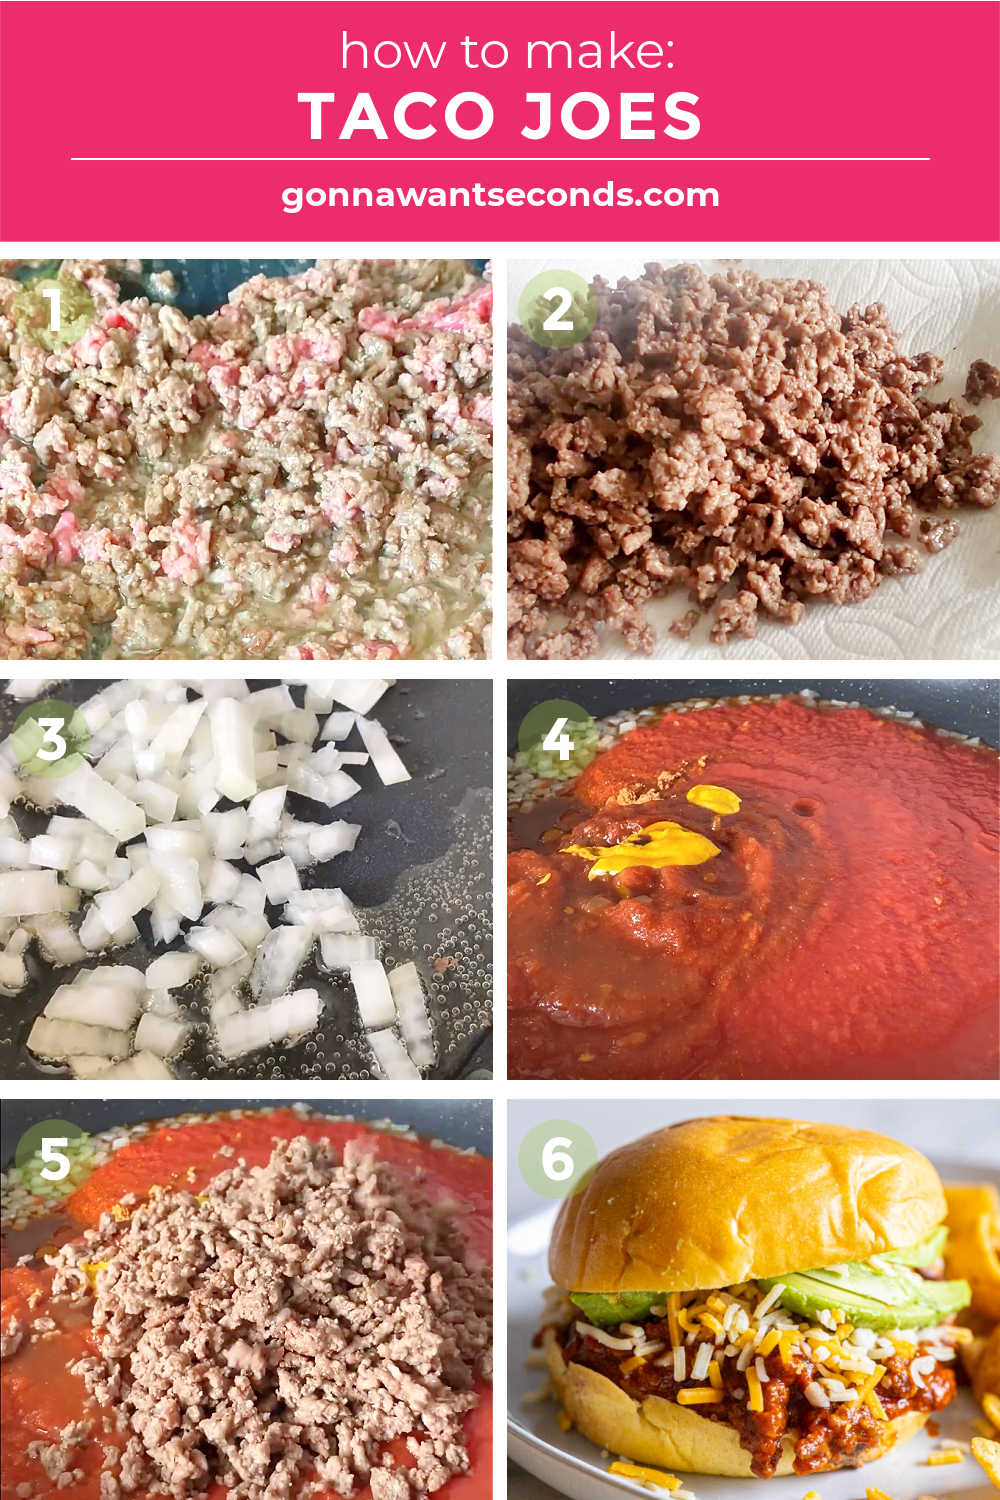 Step by step how to make taco joes